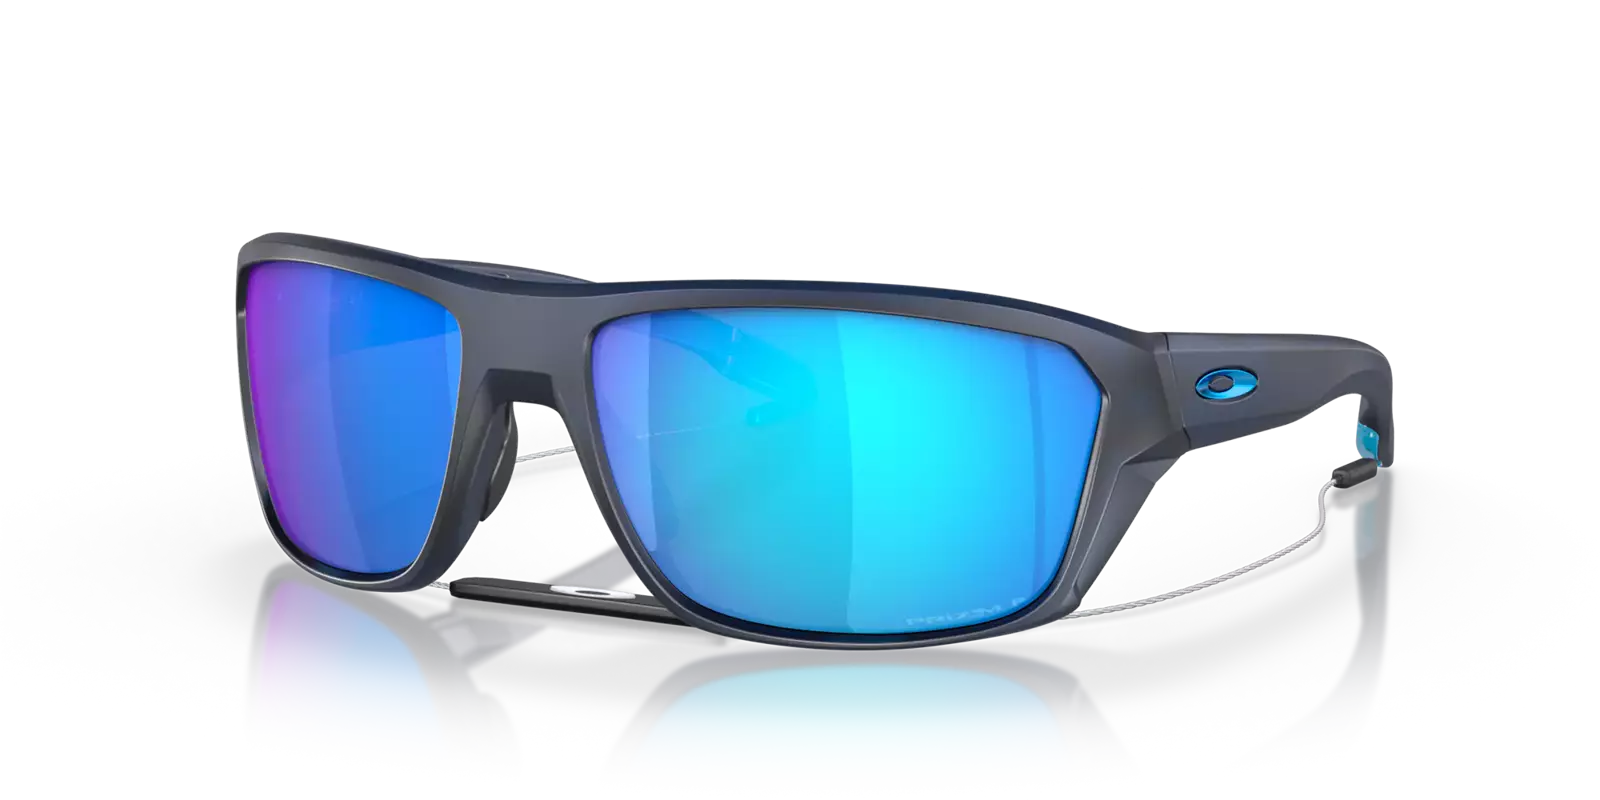 oakley blue sunglasses